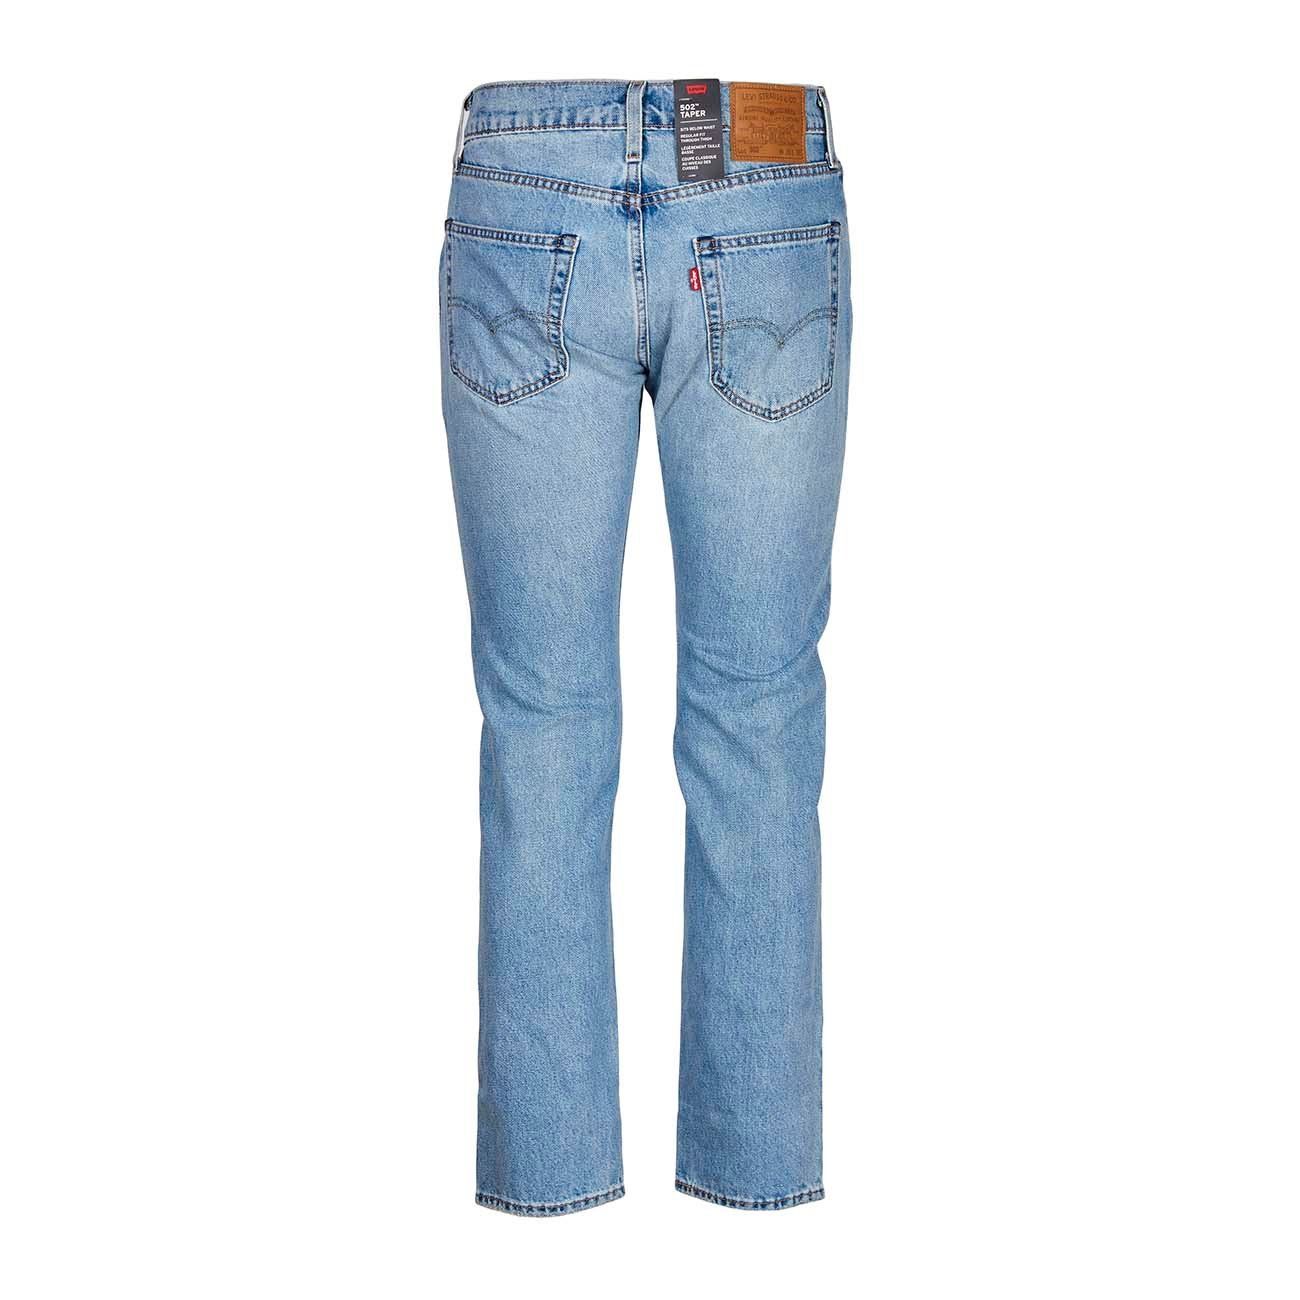 502 taper jeans